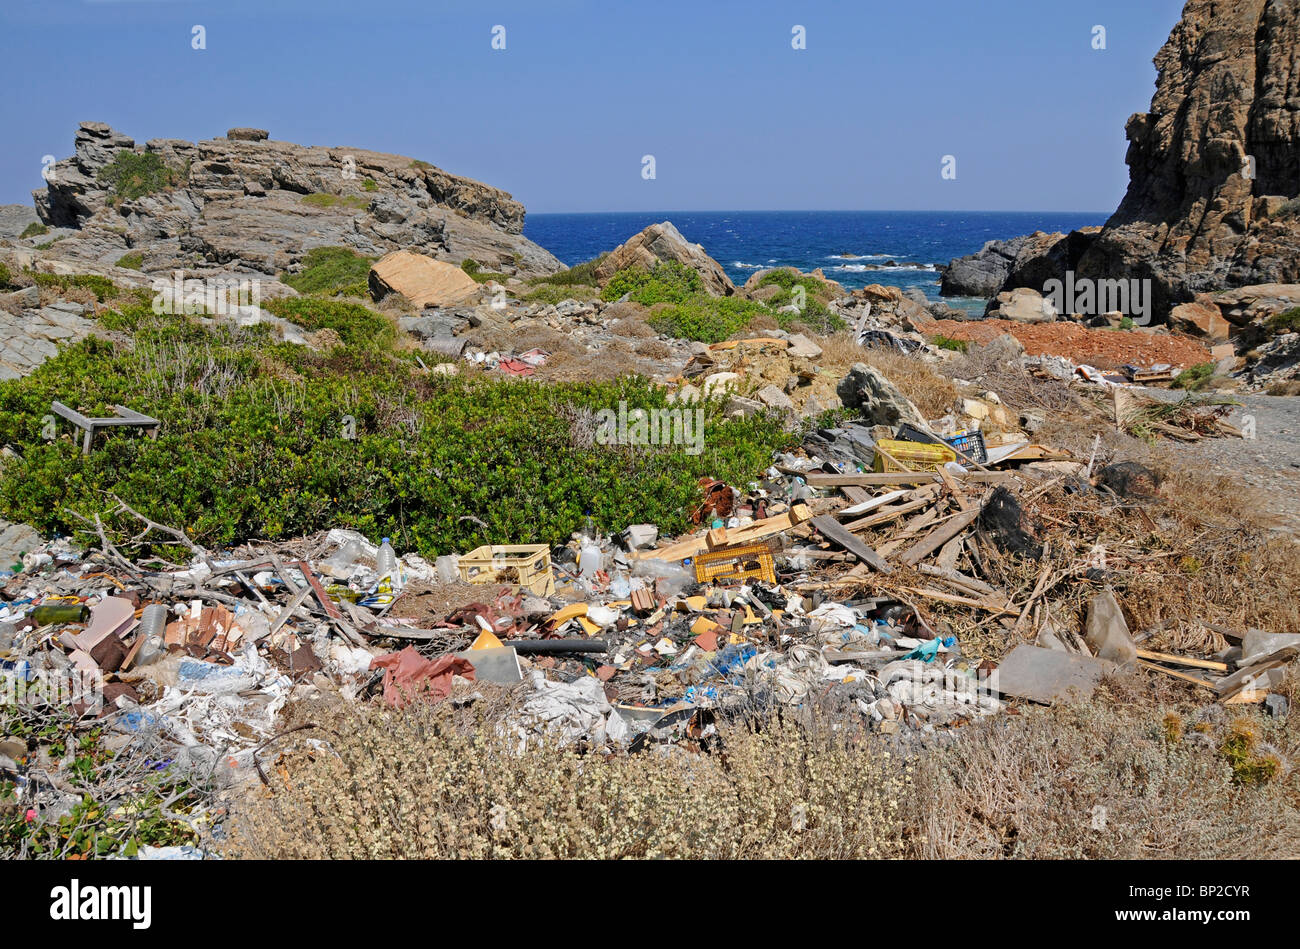 Müll illegal auf Kreta Strand deponiert. Livadia, Kreta, Griechenland. Stockfoto